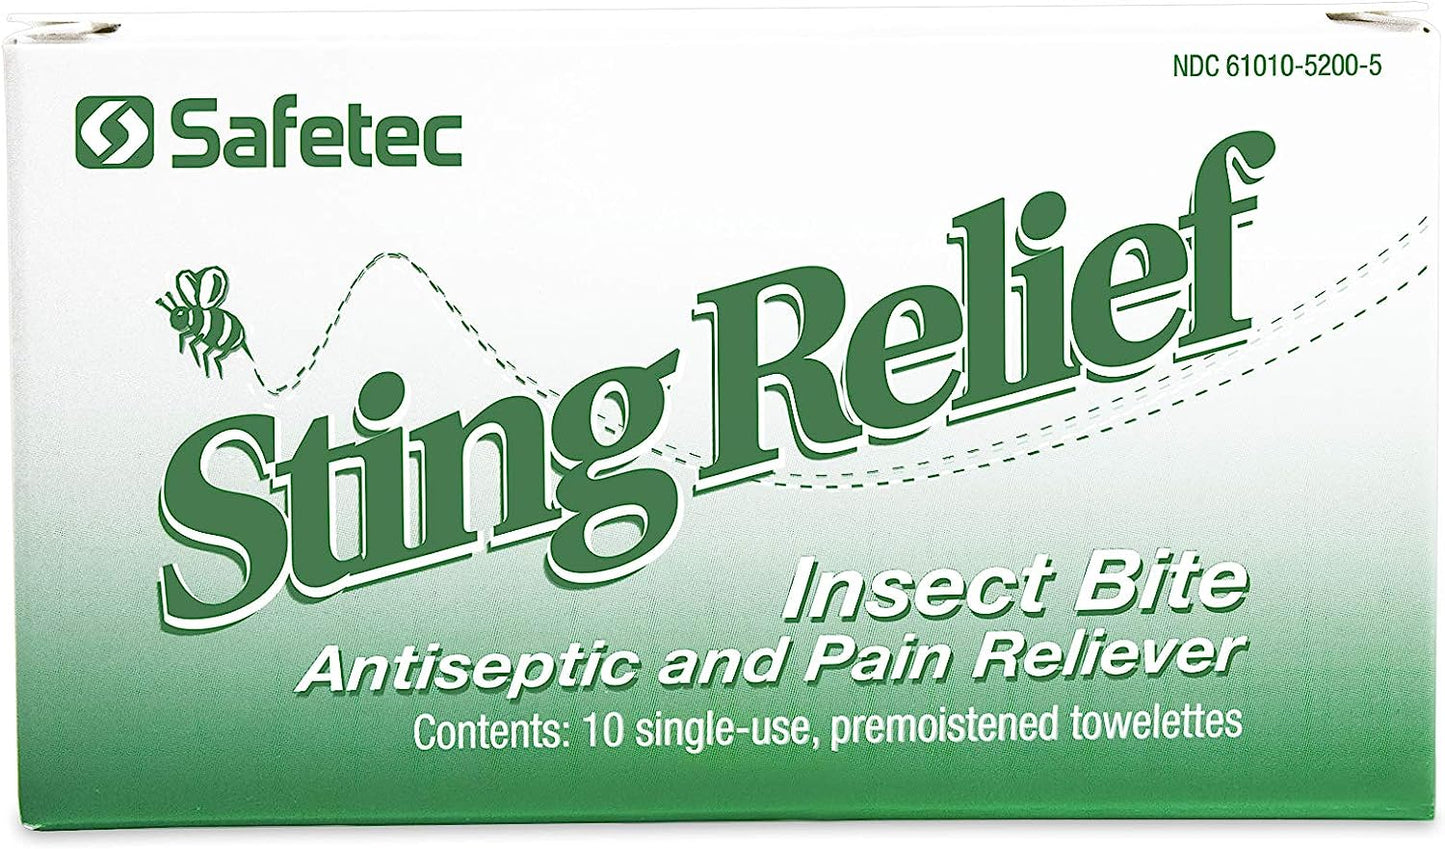 Safetec Sting Relief Wipe (48/Box)